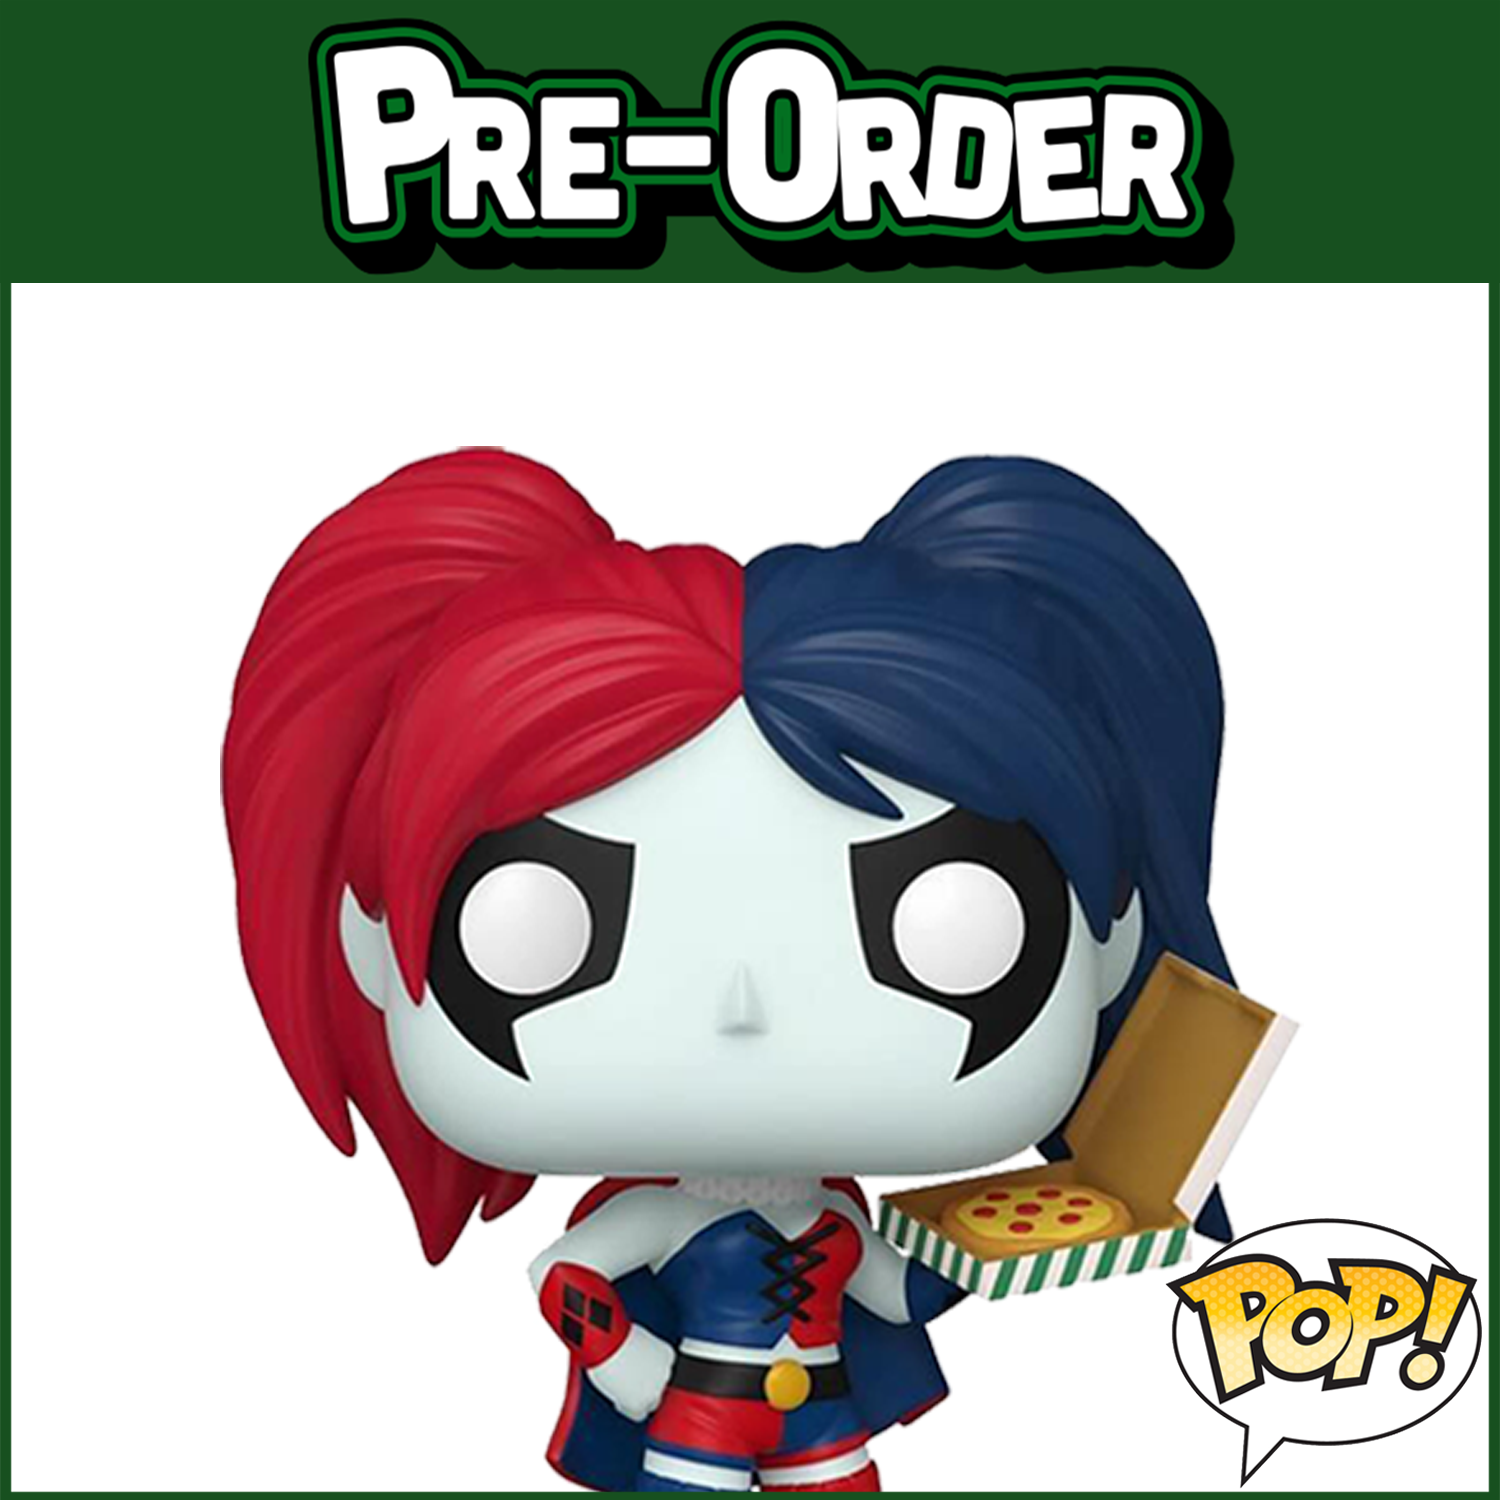 Harley Quinn W/ Pizza #452 Funko Pop! Harley Quinn - PREORDER